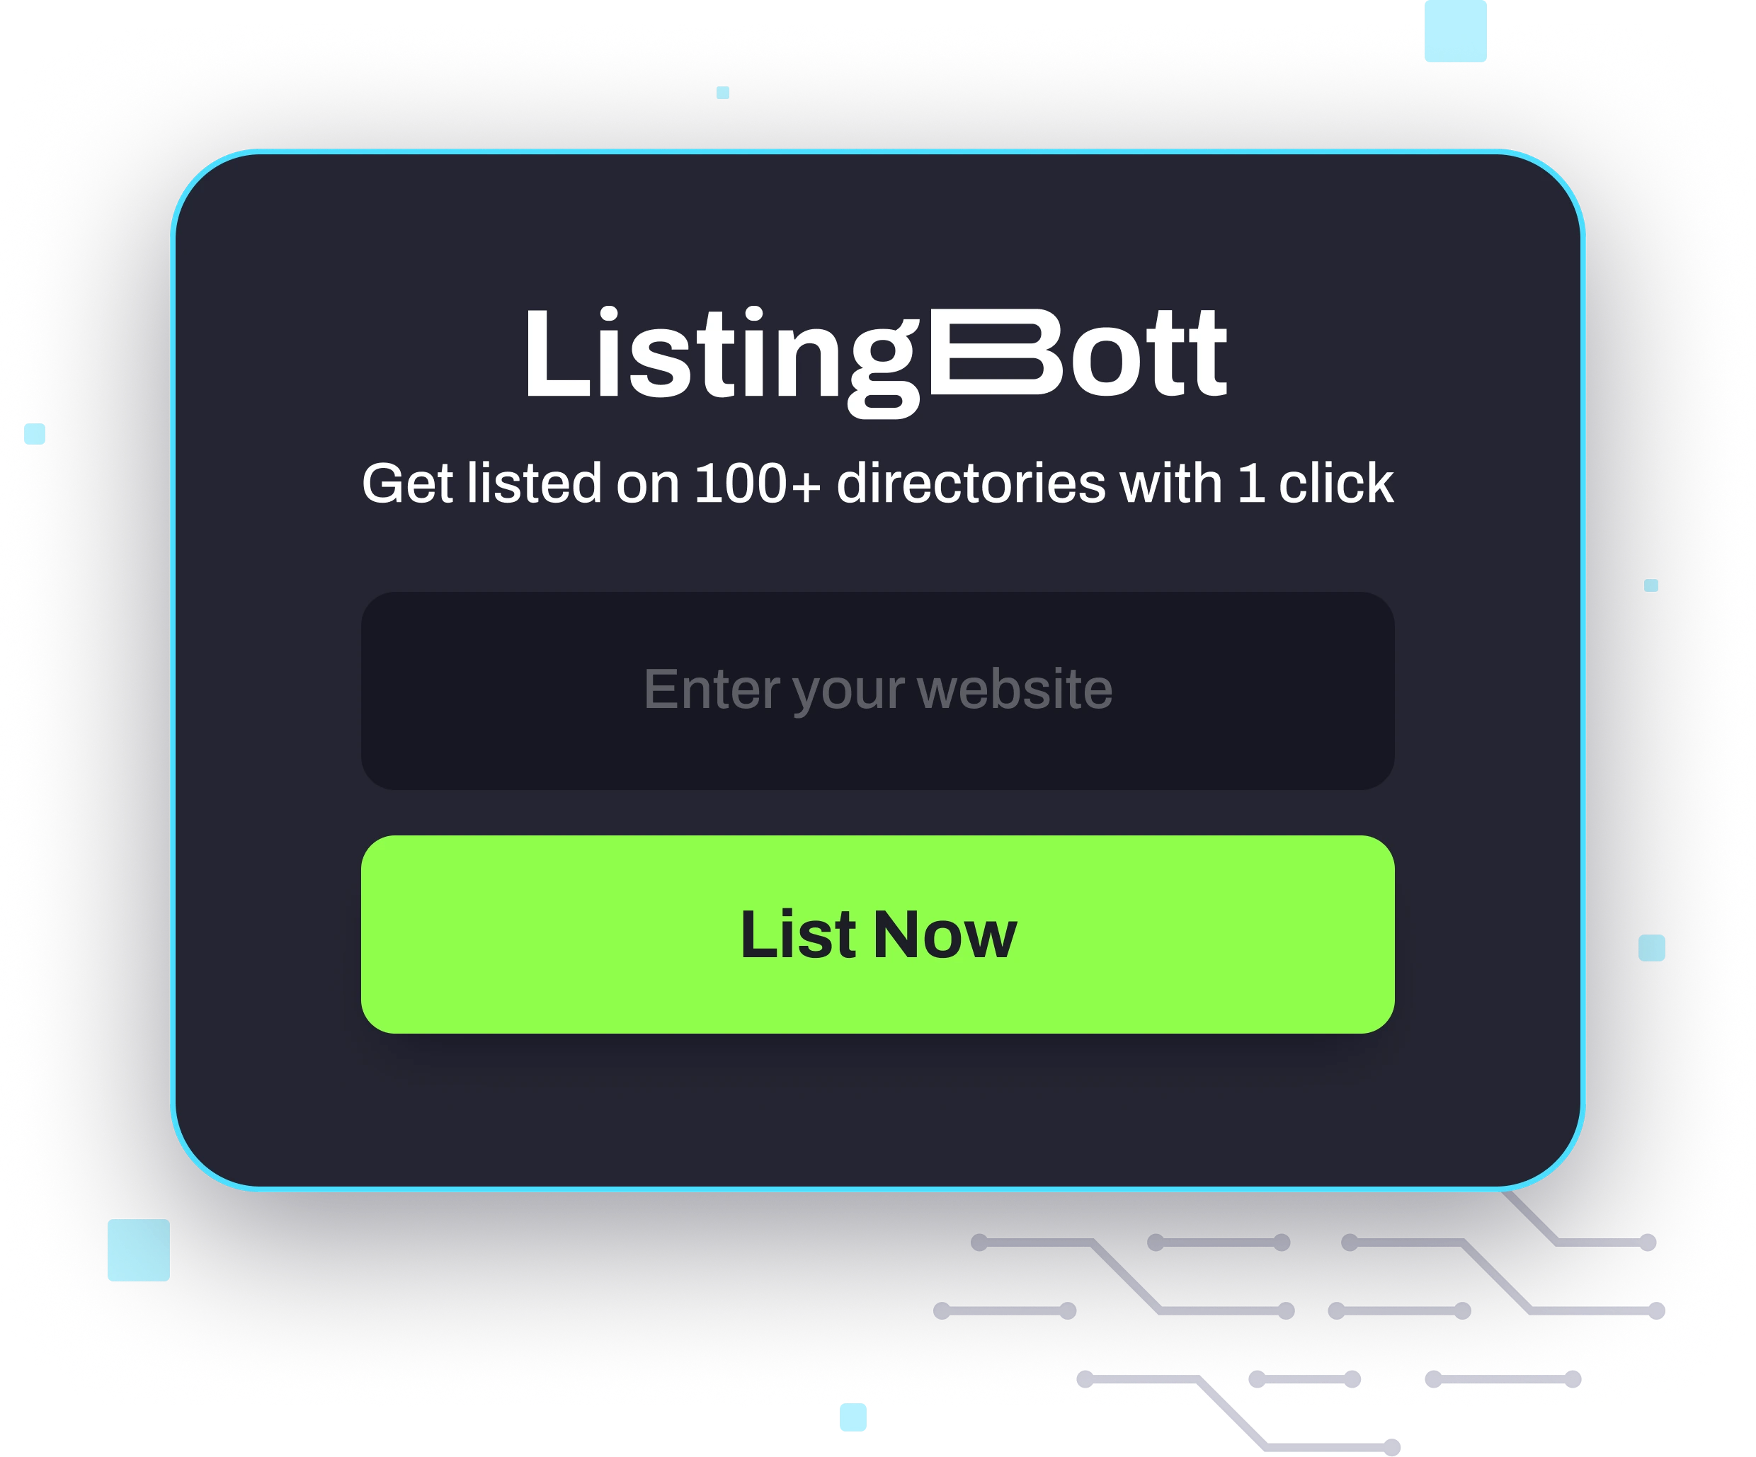 Listing Bot